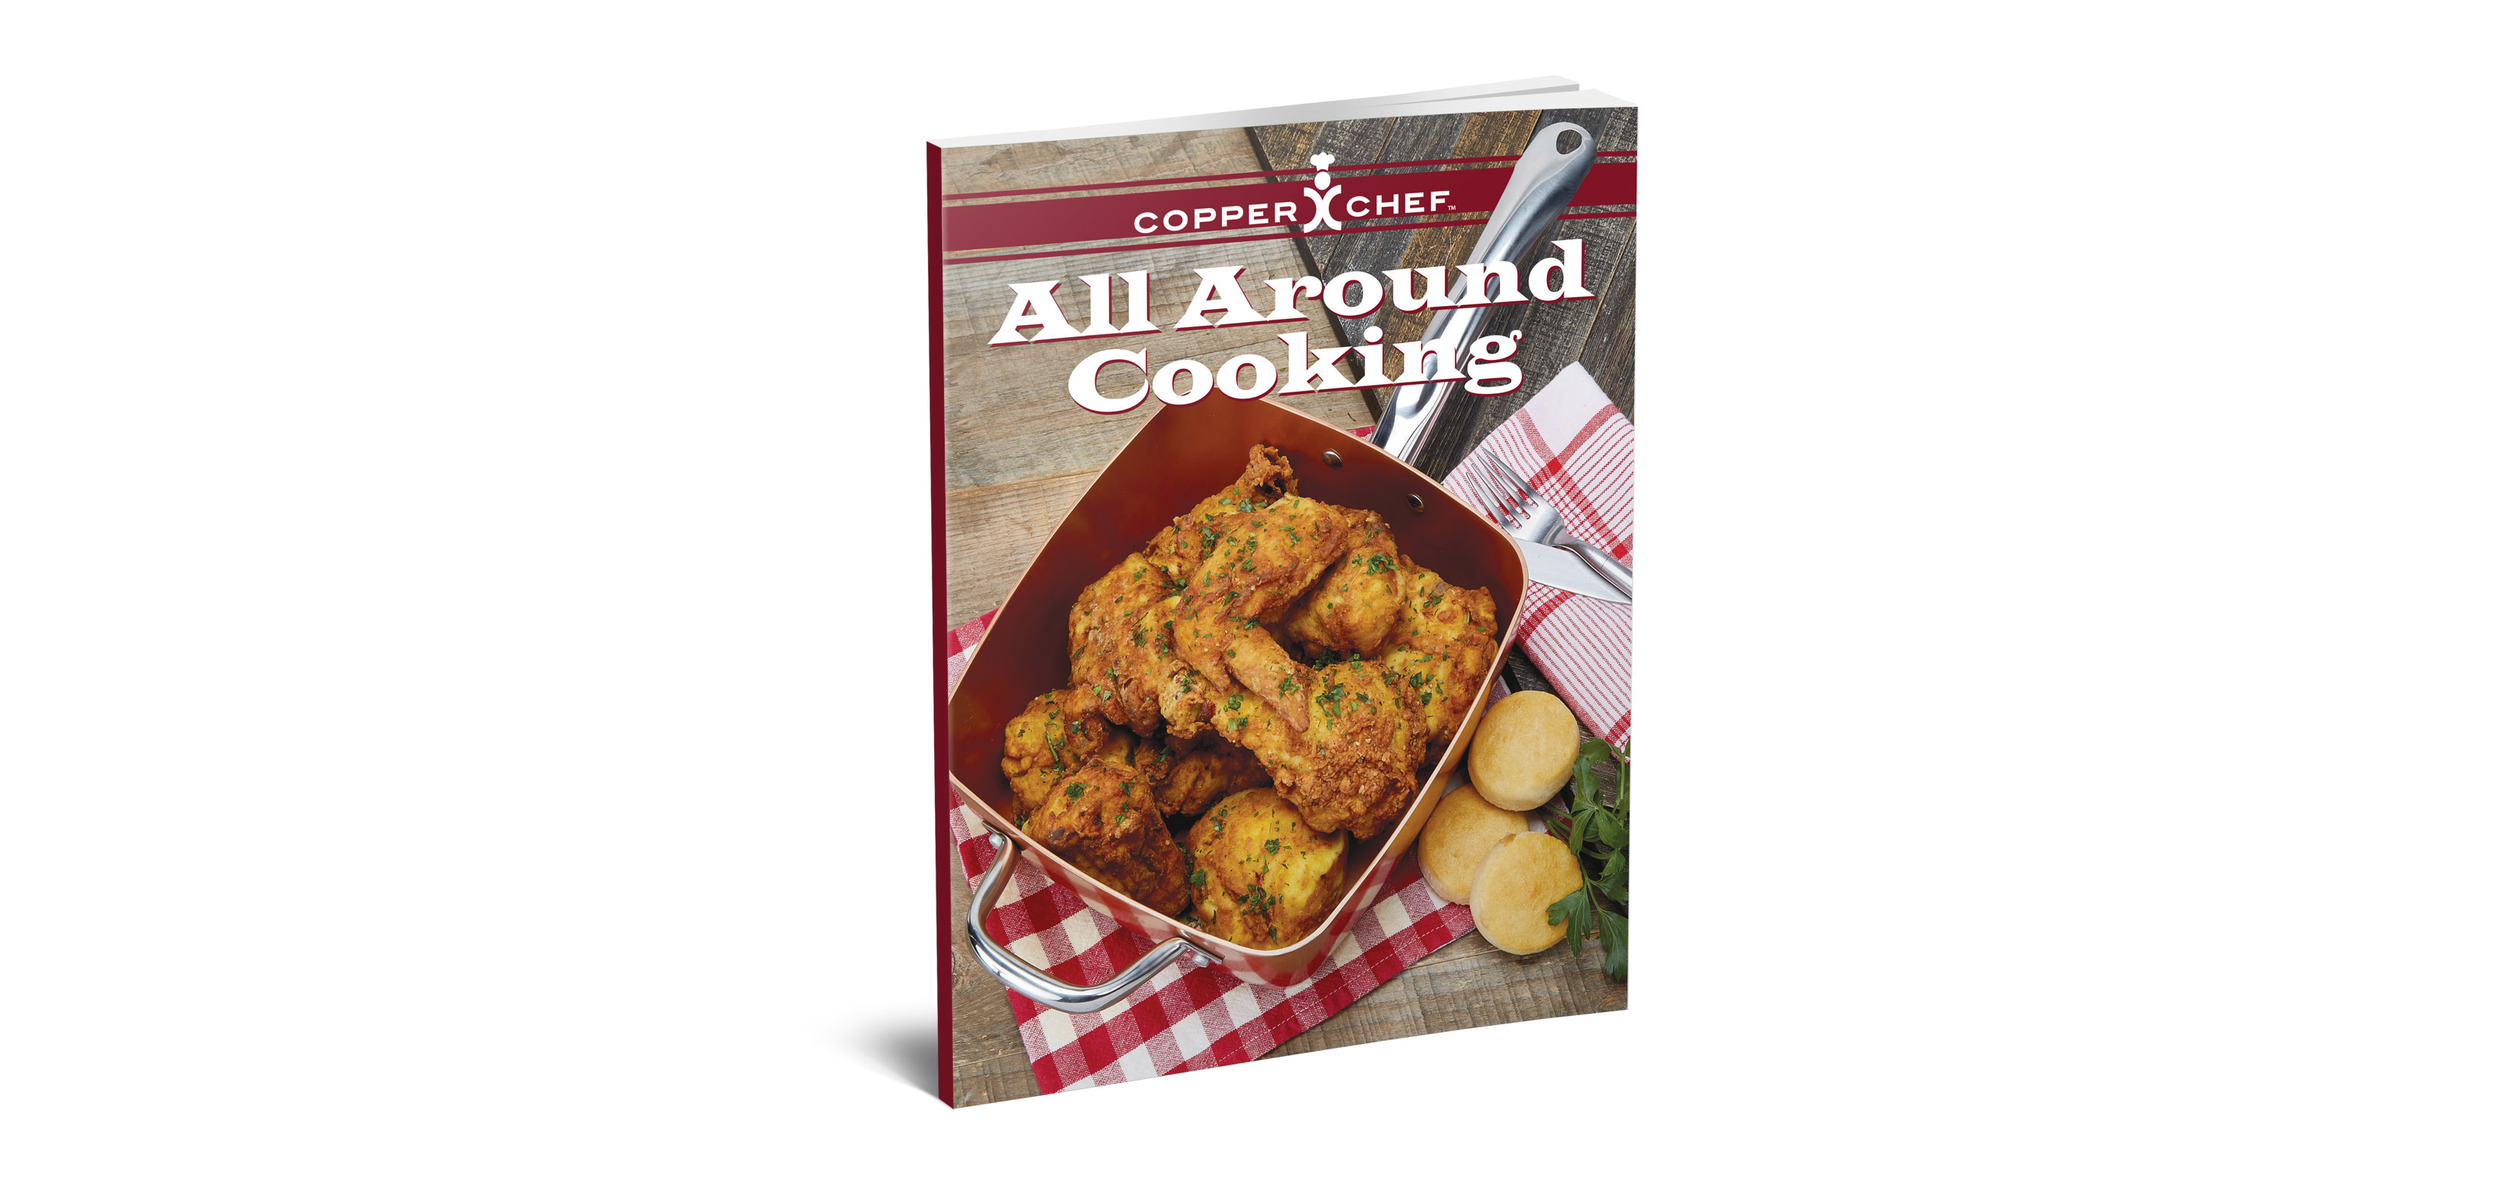 Tristar_Copper Chef_Recipe Book Cover_Mock Up.jpg